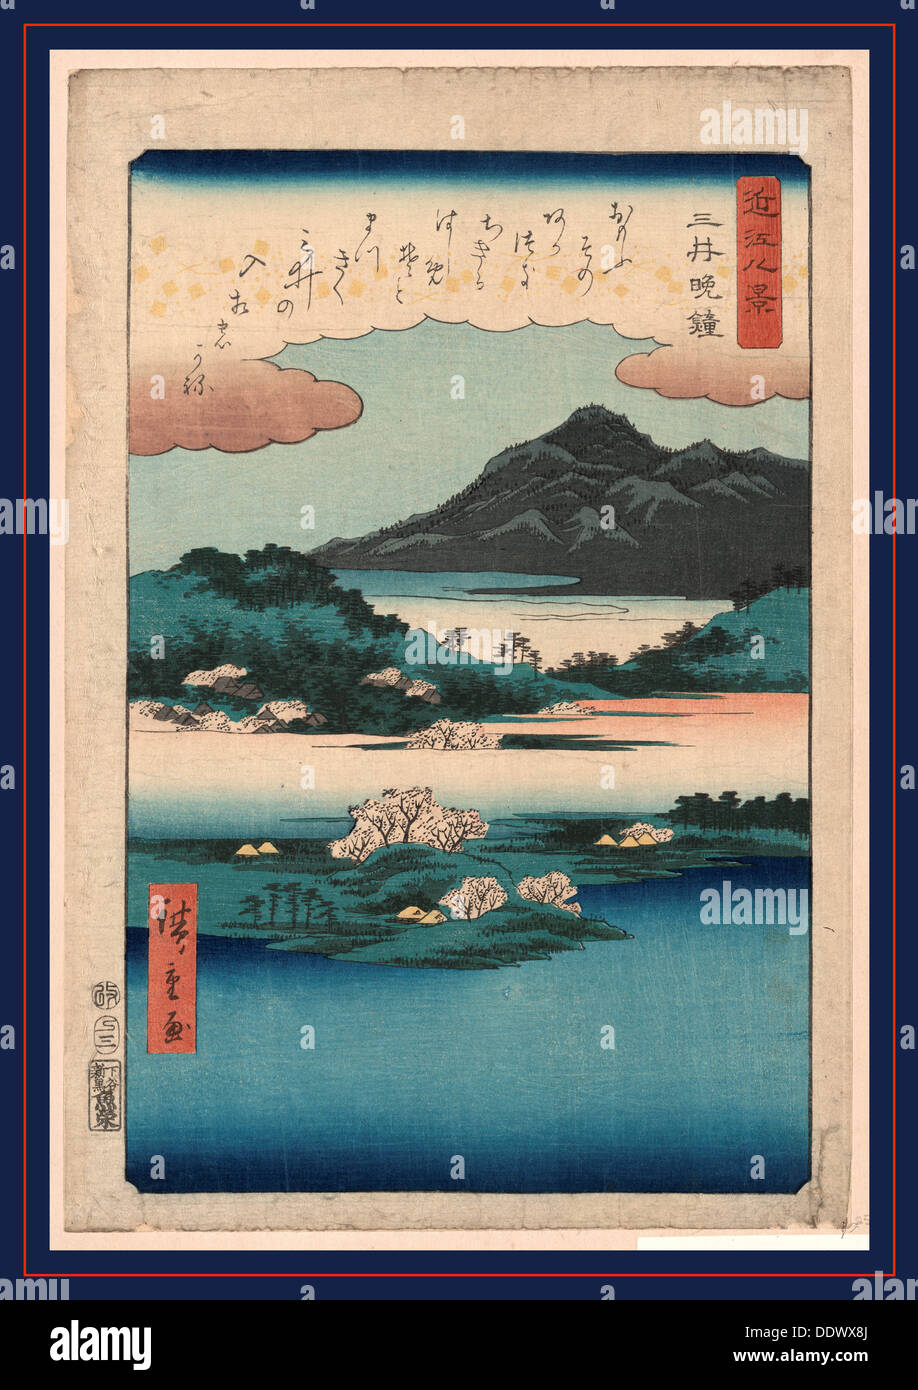 Mii no bansho, Temple bell at Mii. 1857., 1 print : woodcut, color ; 37.3 x 25.5 cm., Print shows a bird's-eye view of sea and Stock Photo